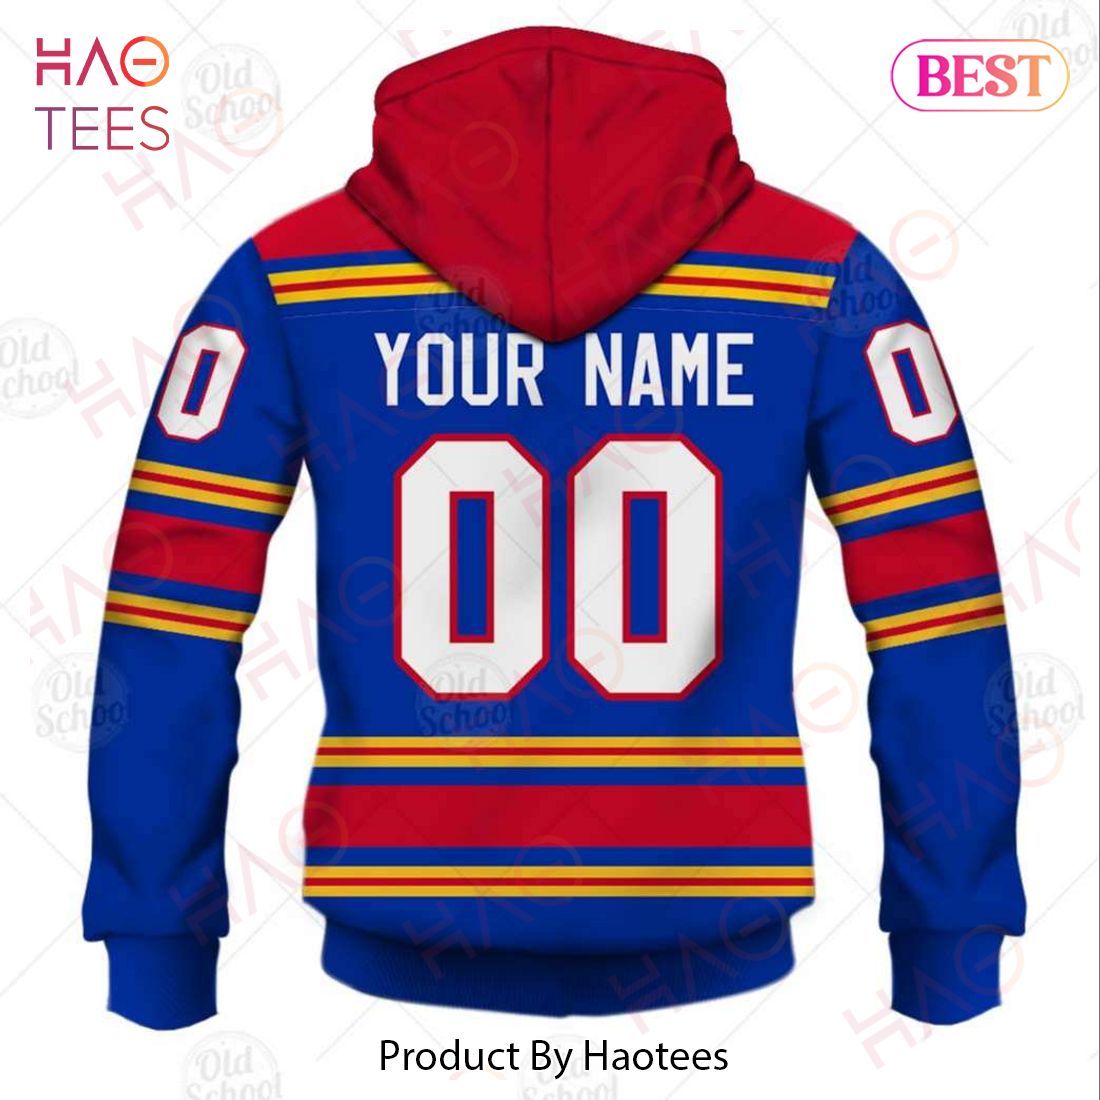 Vintage New Jersey Devils Ice Hockey Unisex Sweatshirt - Trends Bedding